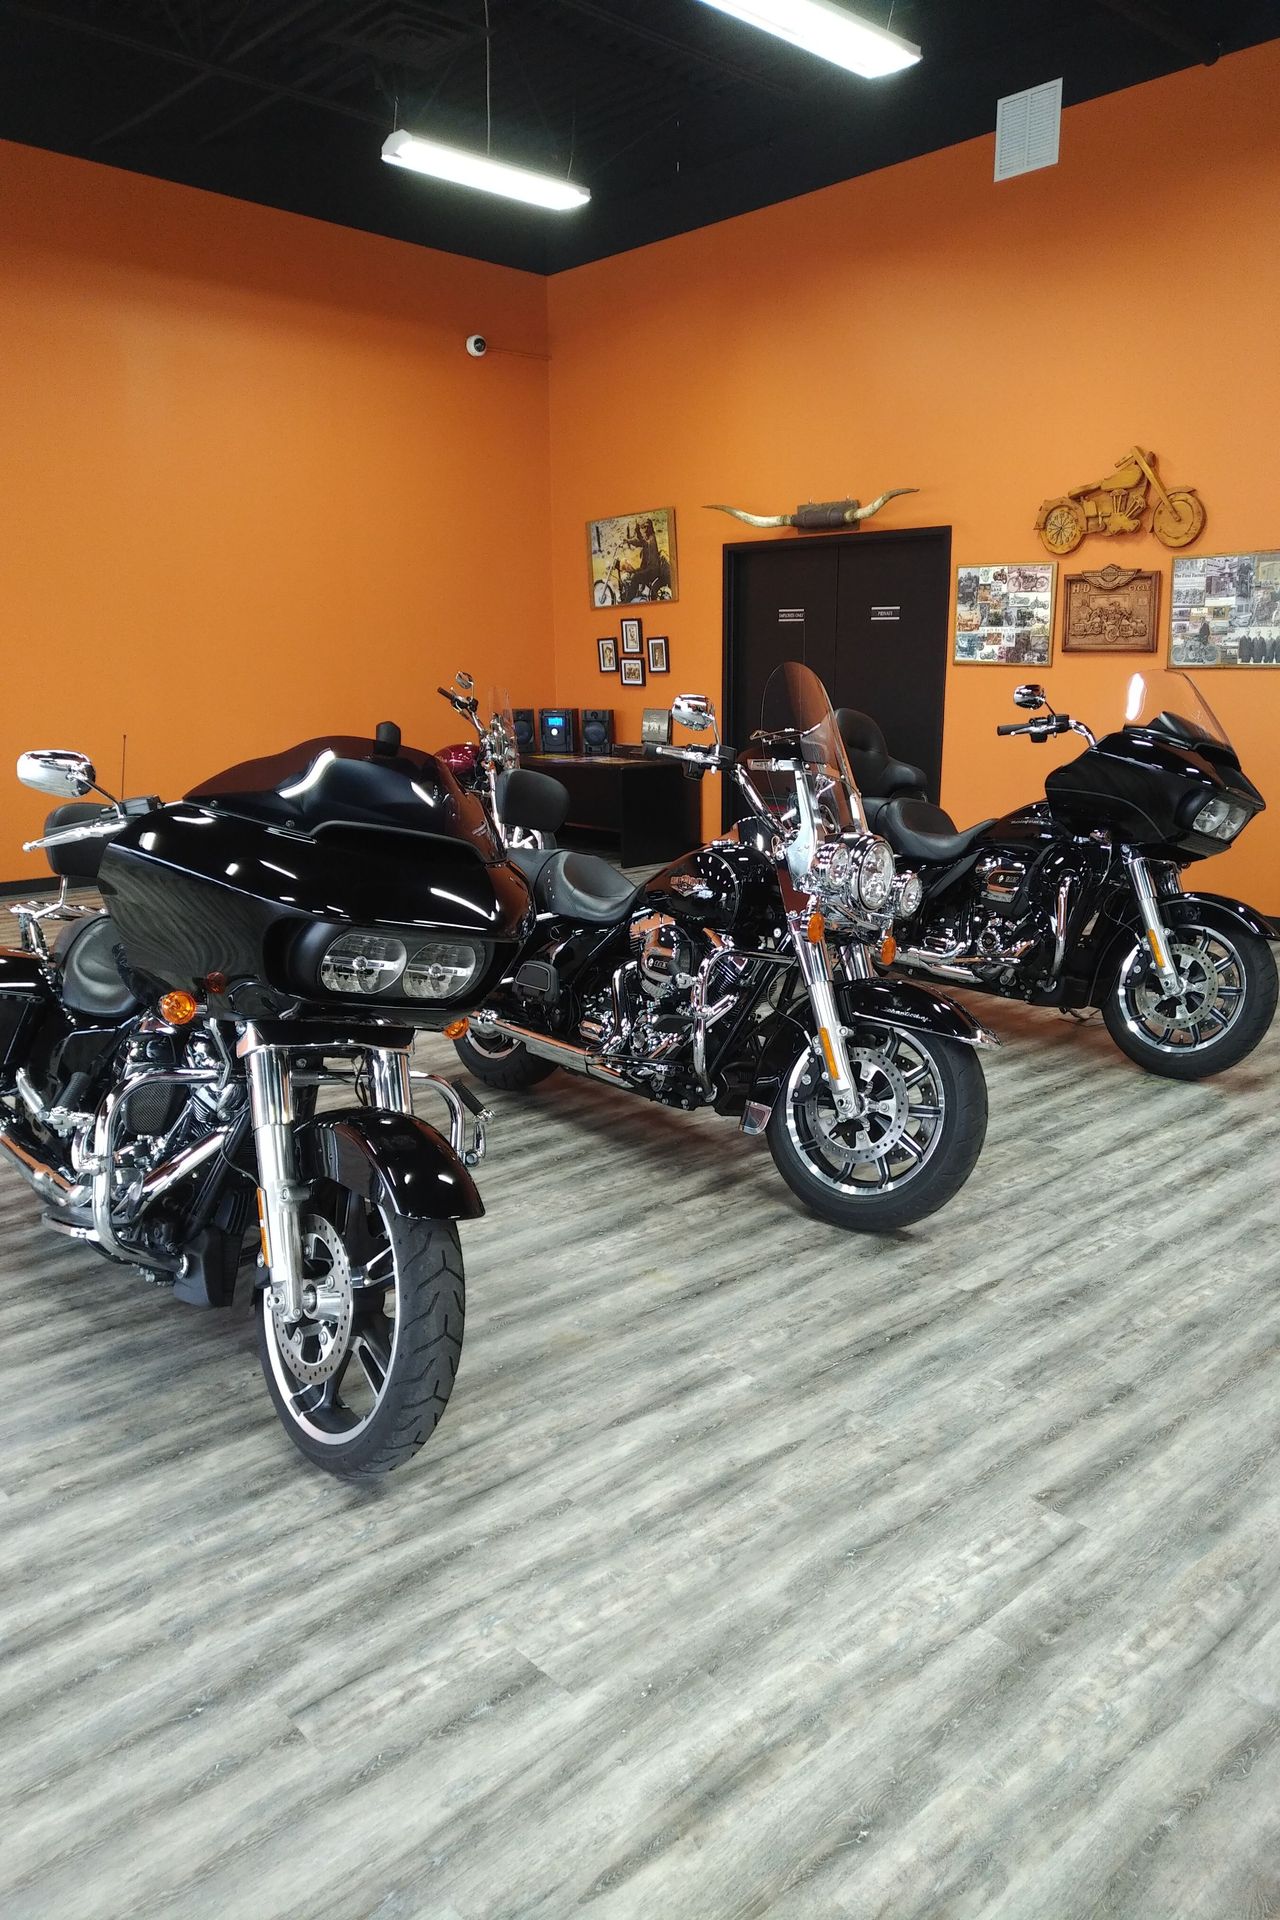 Late model Harley Davidson motorcycles